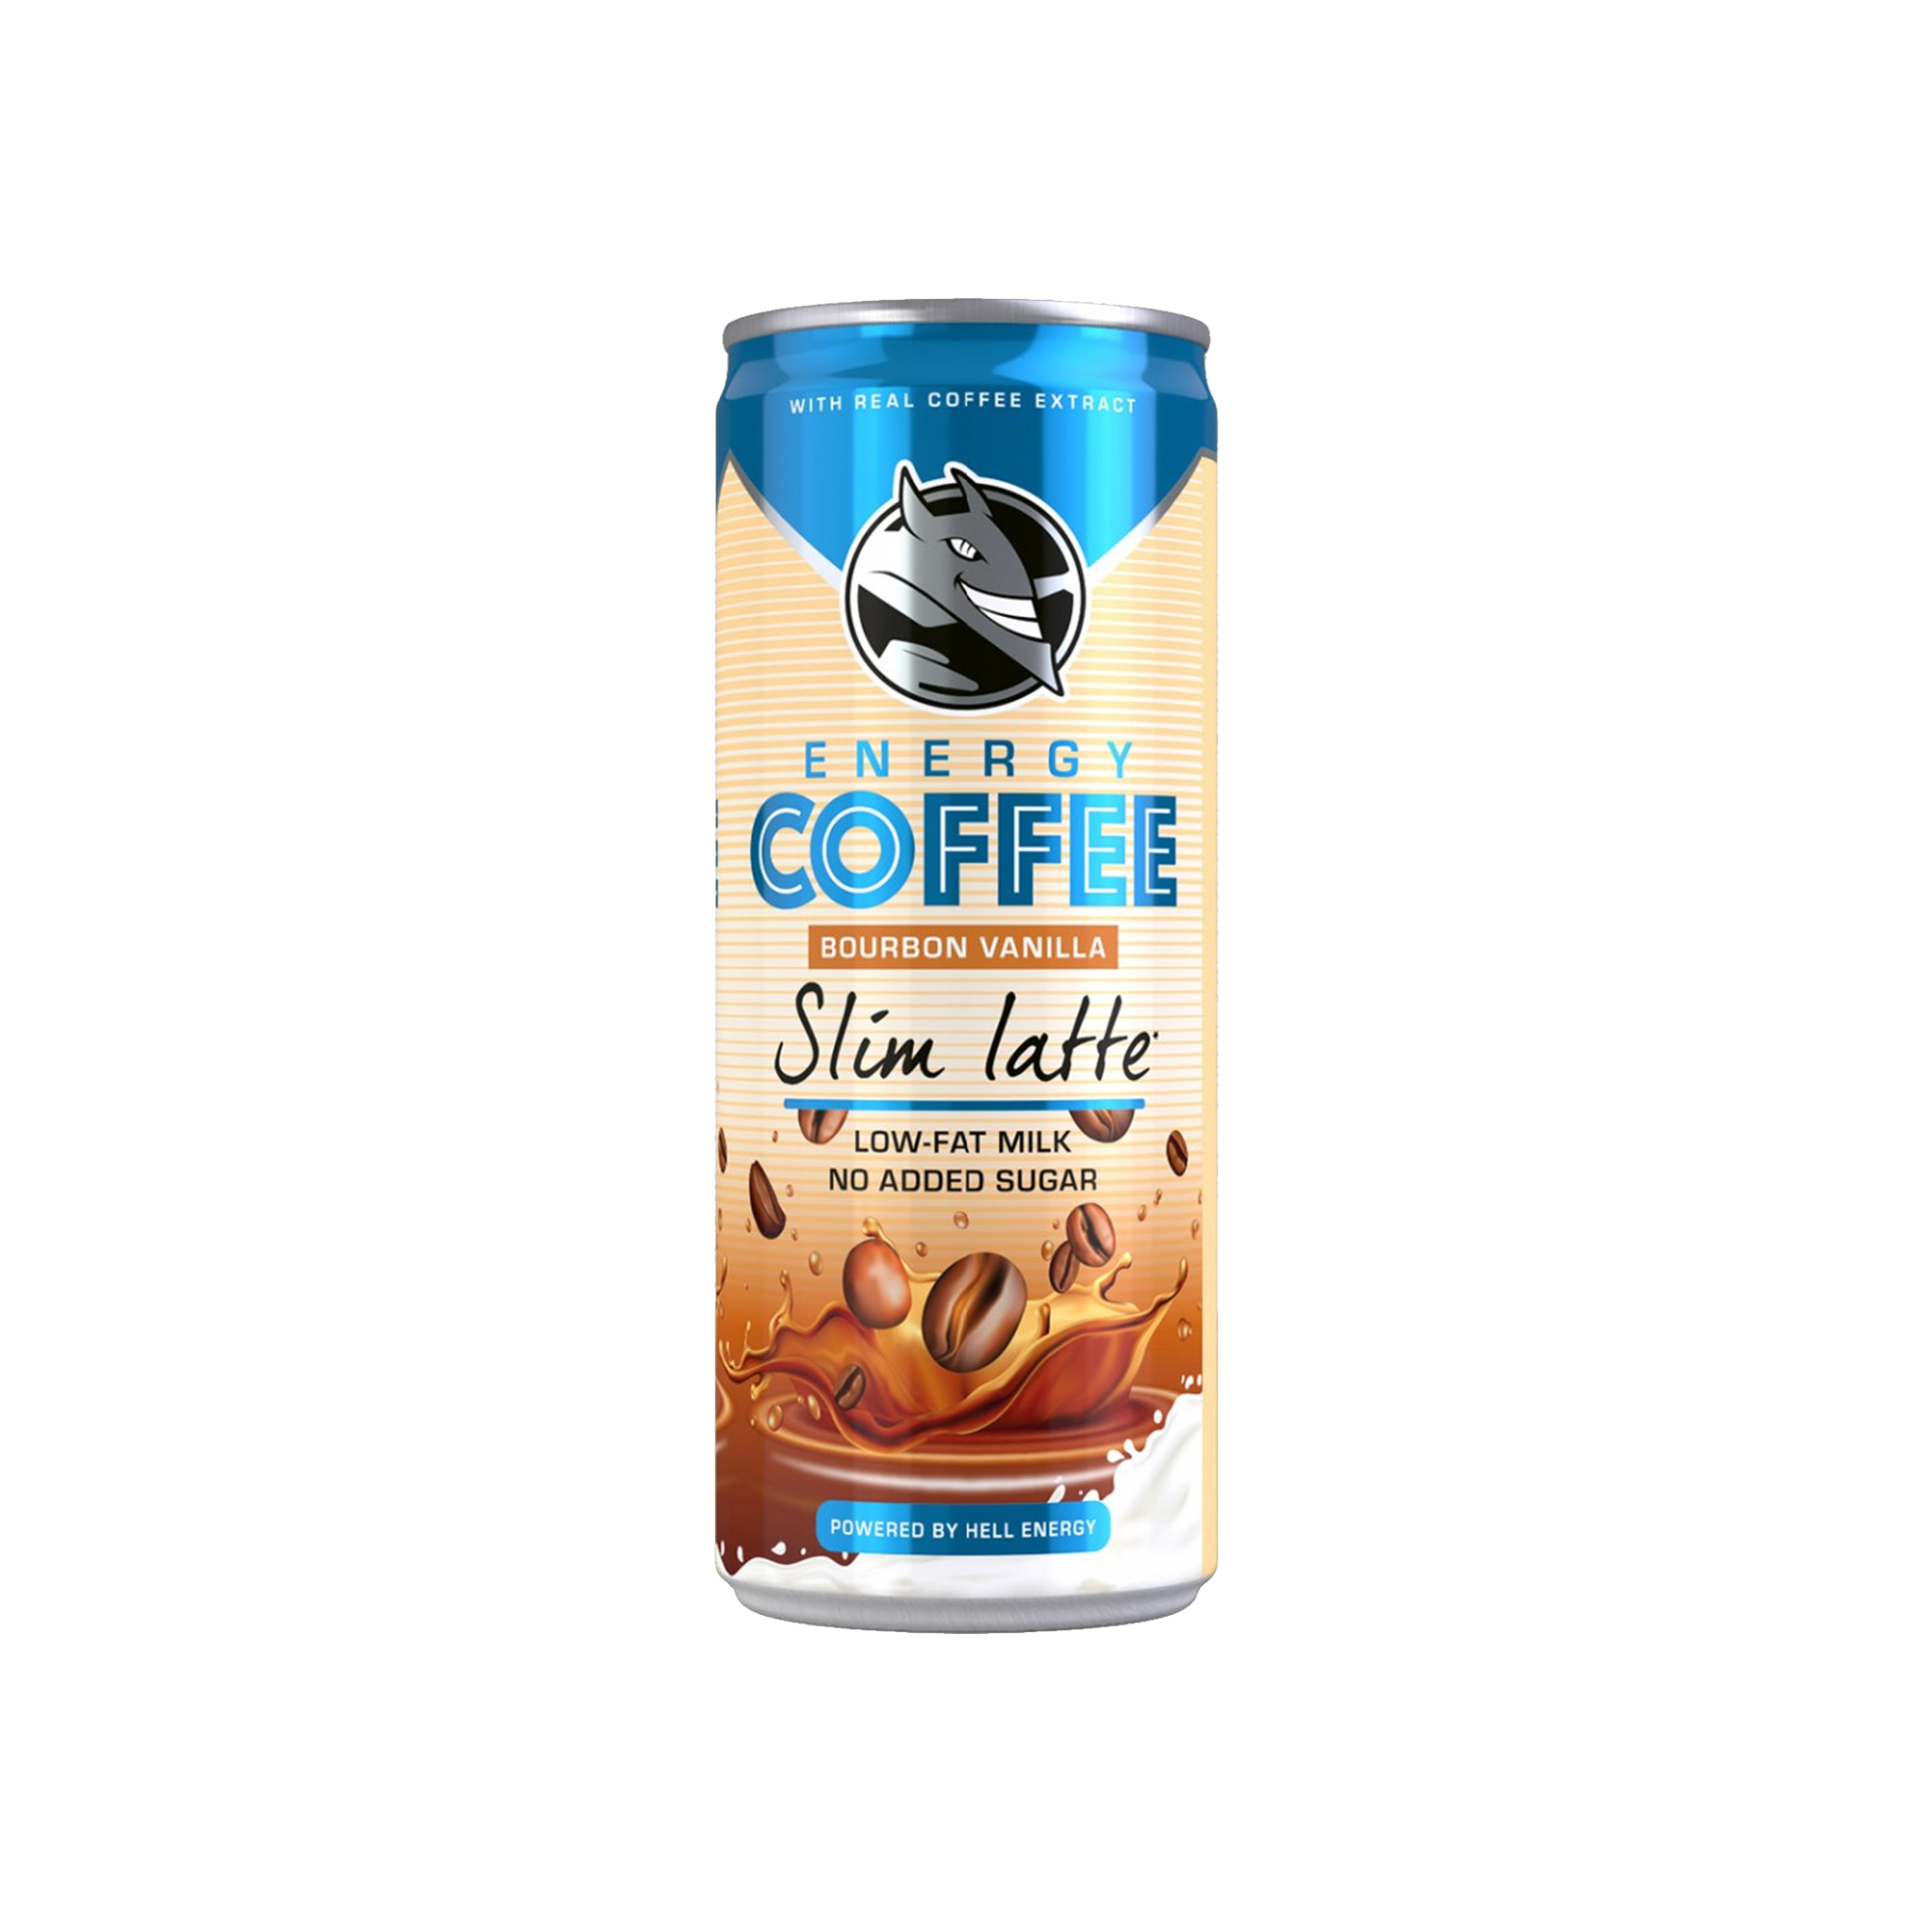 HELL ENERGY COFFEE Latte Iced Coffee 250ml